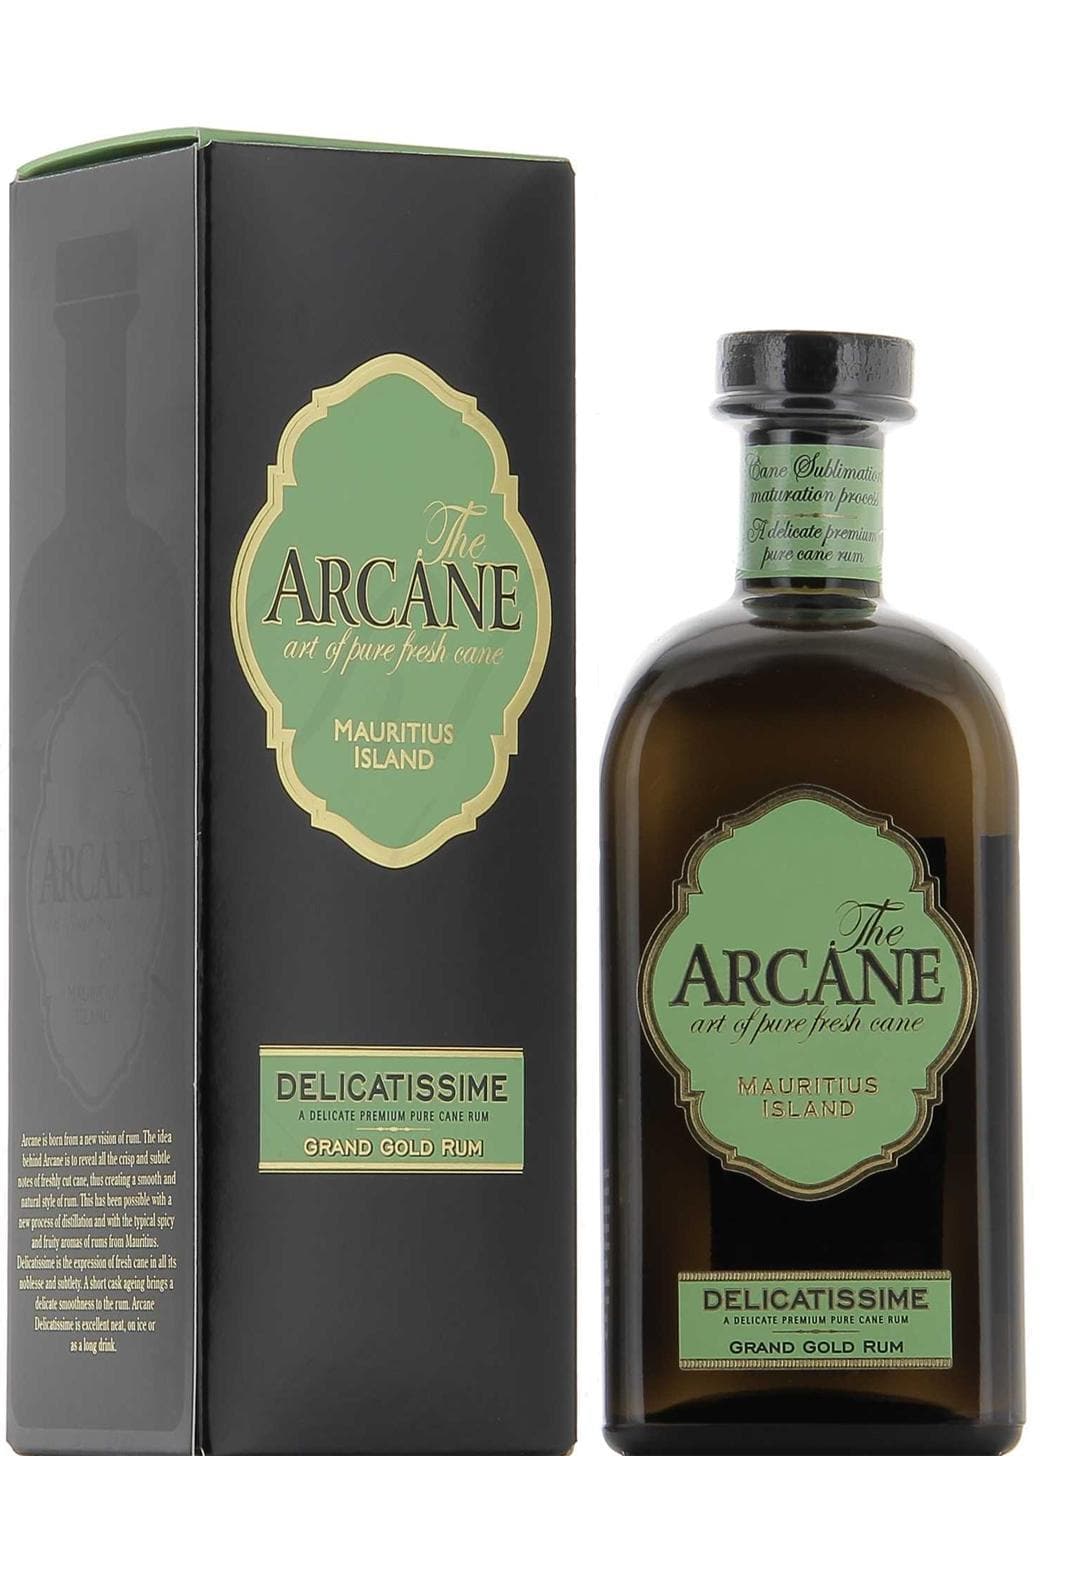 Arcane Gold Rum 'Delicatissime' 1.5 years 41% 700ml | Rum | Shop online at Spirits of France